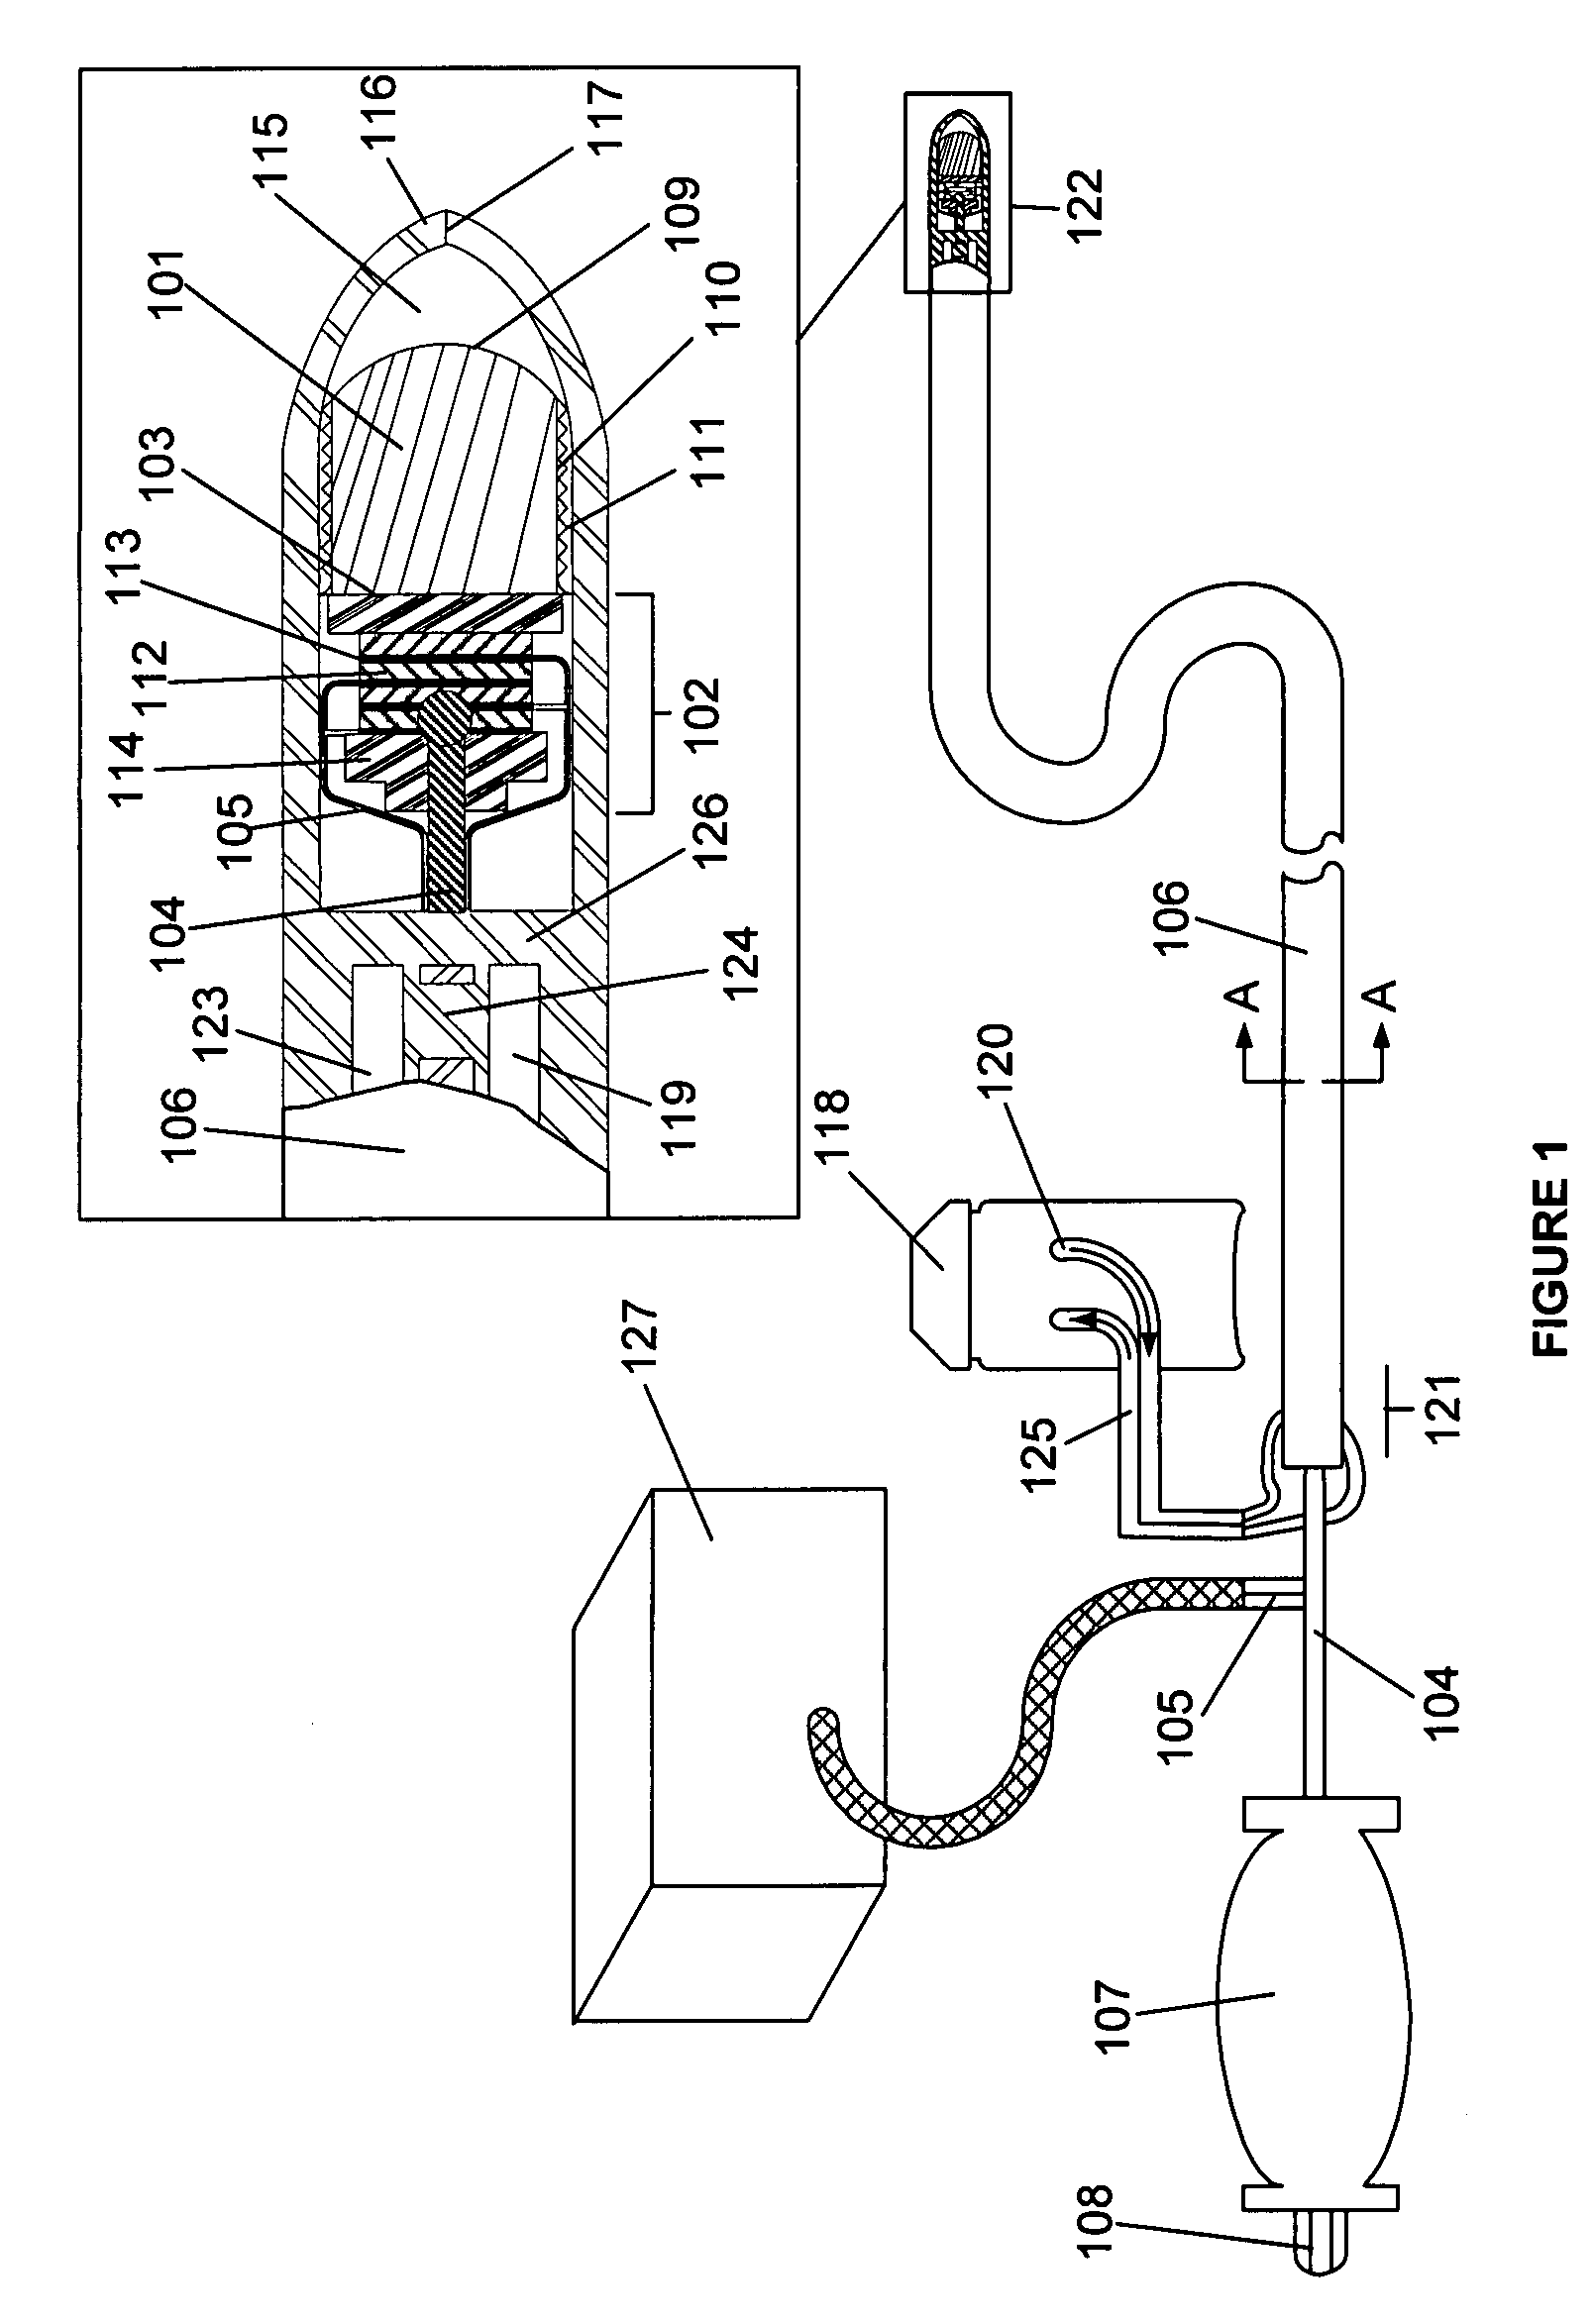 Ablative ultrasonic-cryogenic apparatus